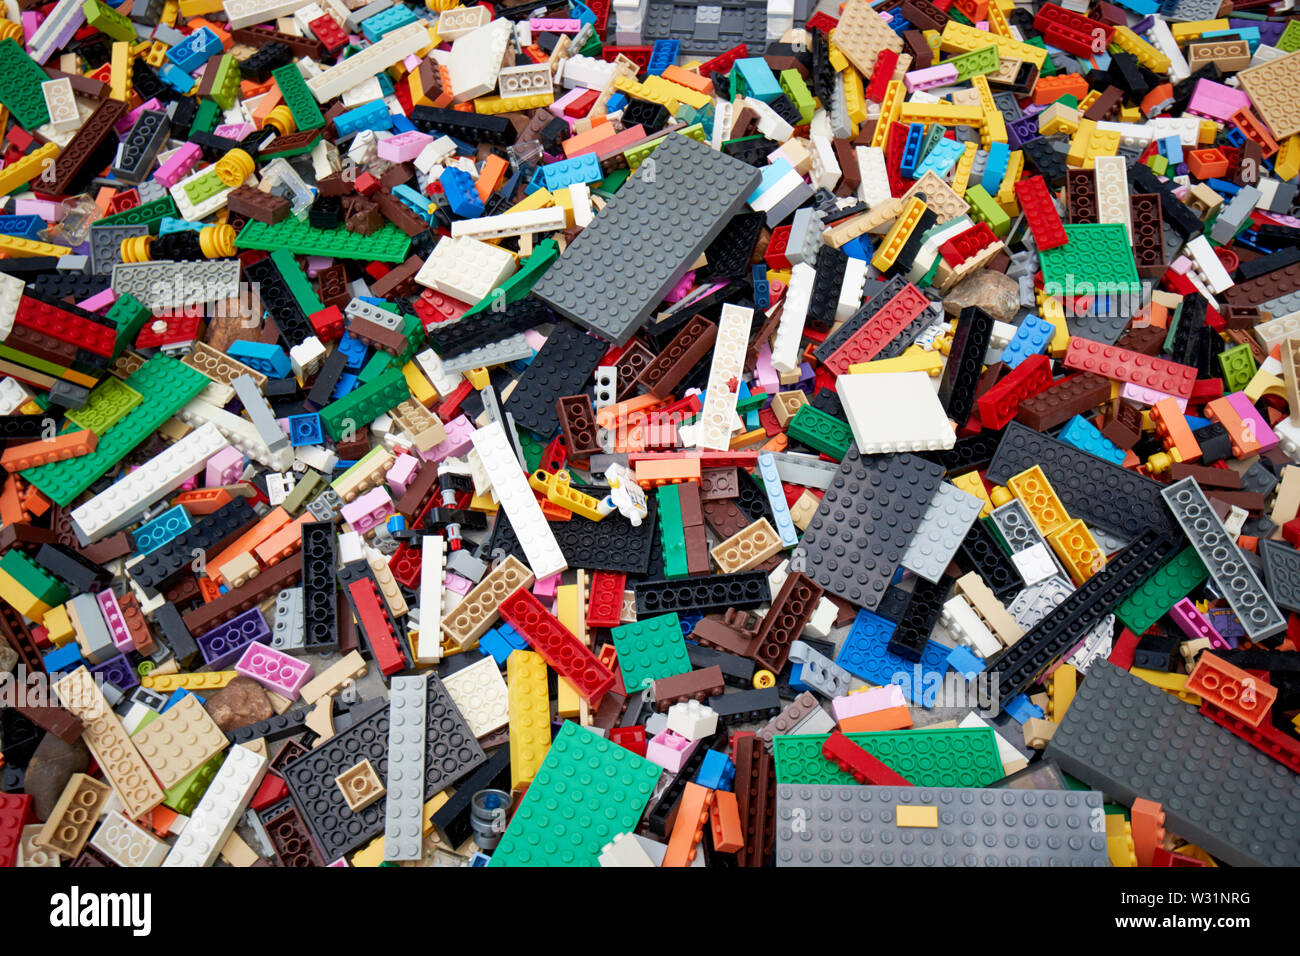 25,095 Lego Blocks Images, Stock Photos, 3D objects, & Vectors